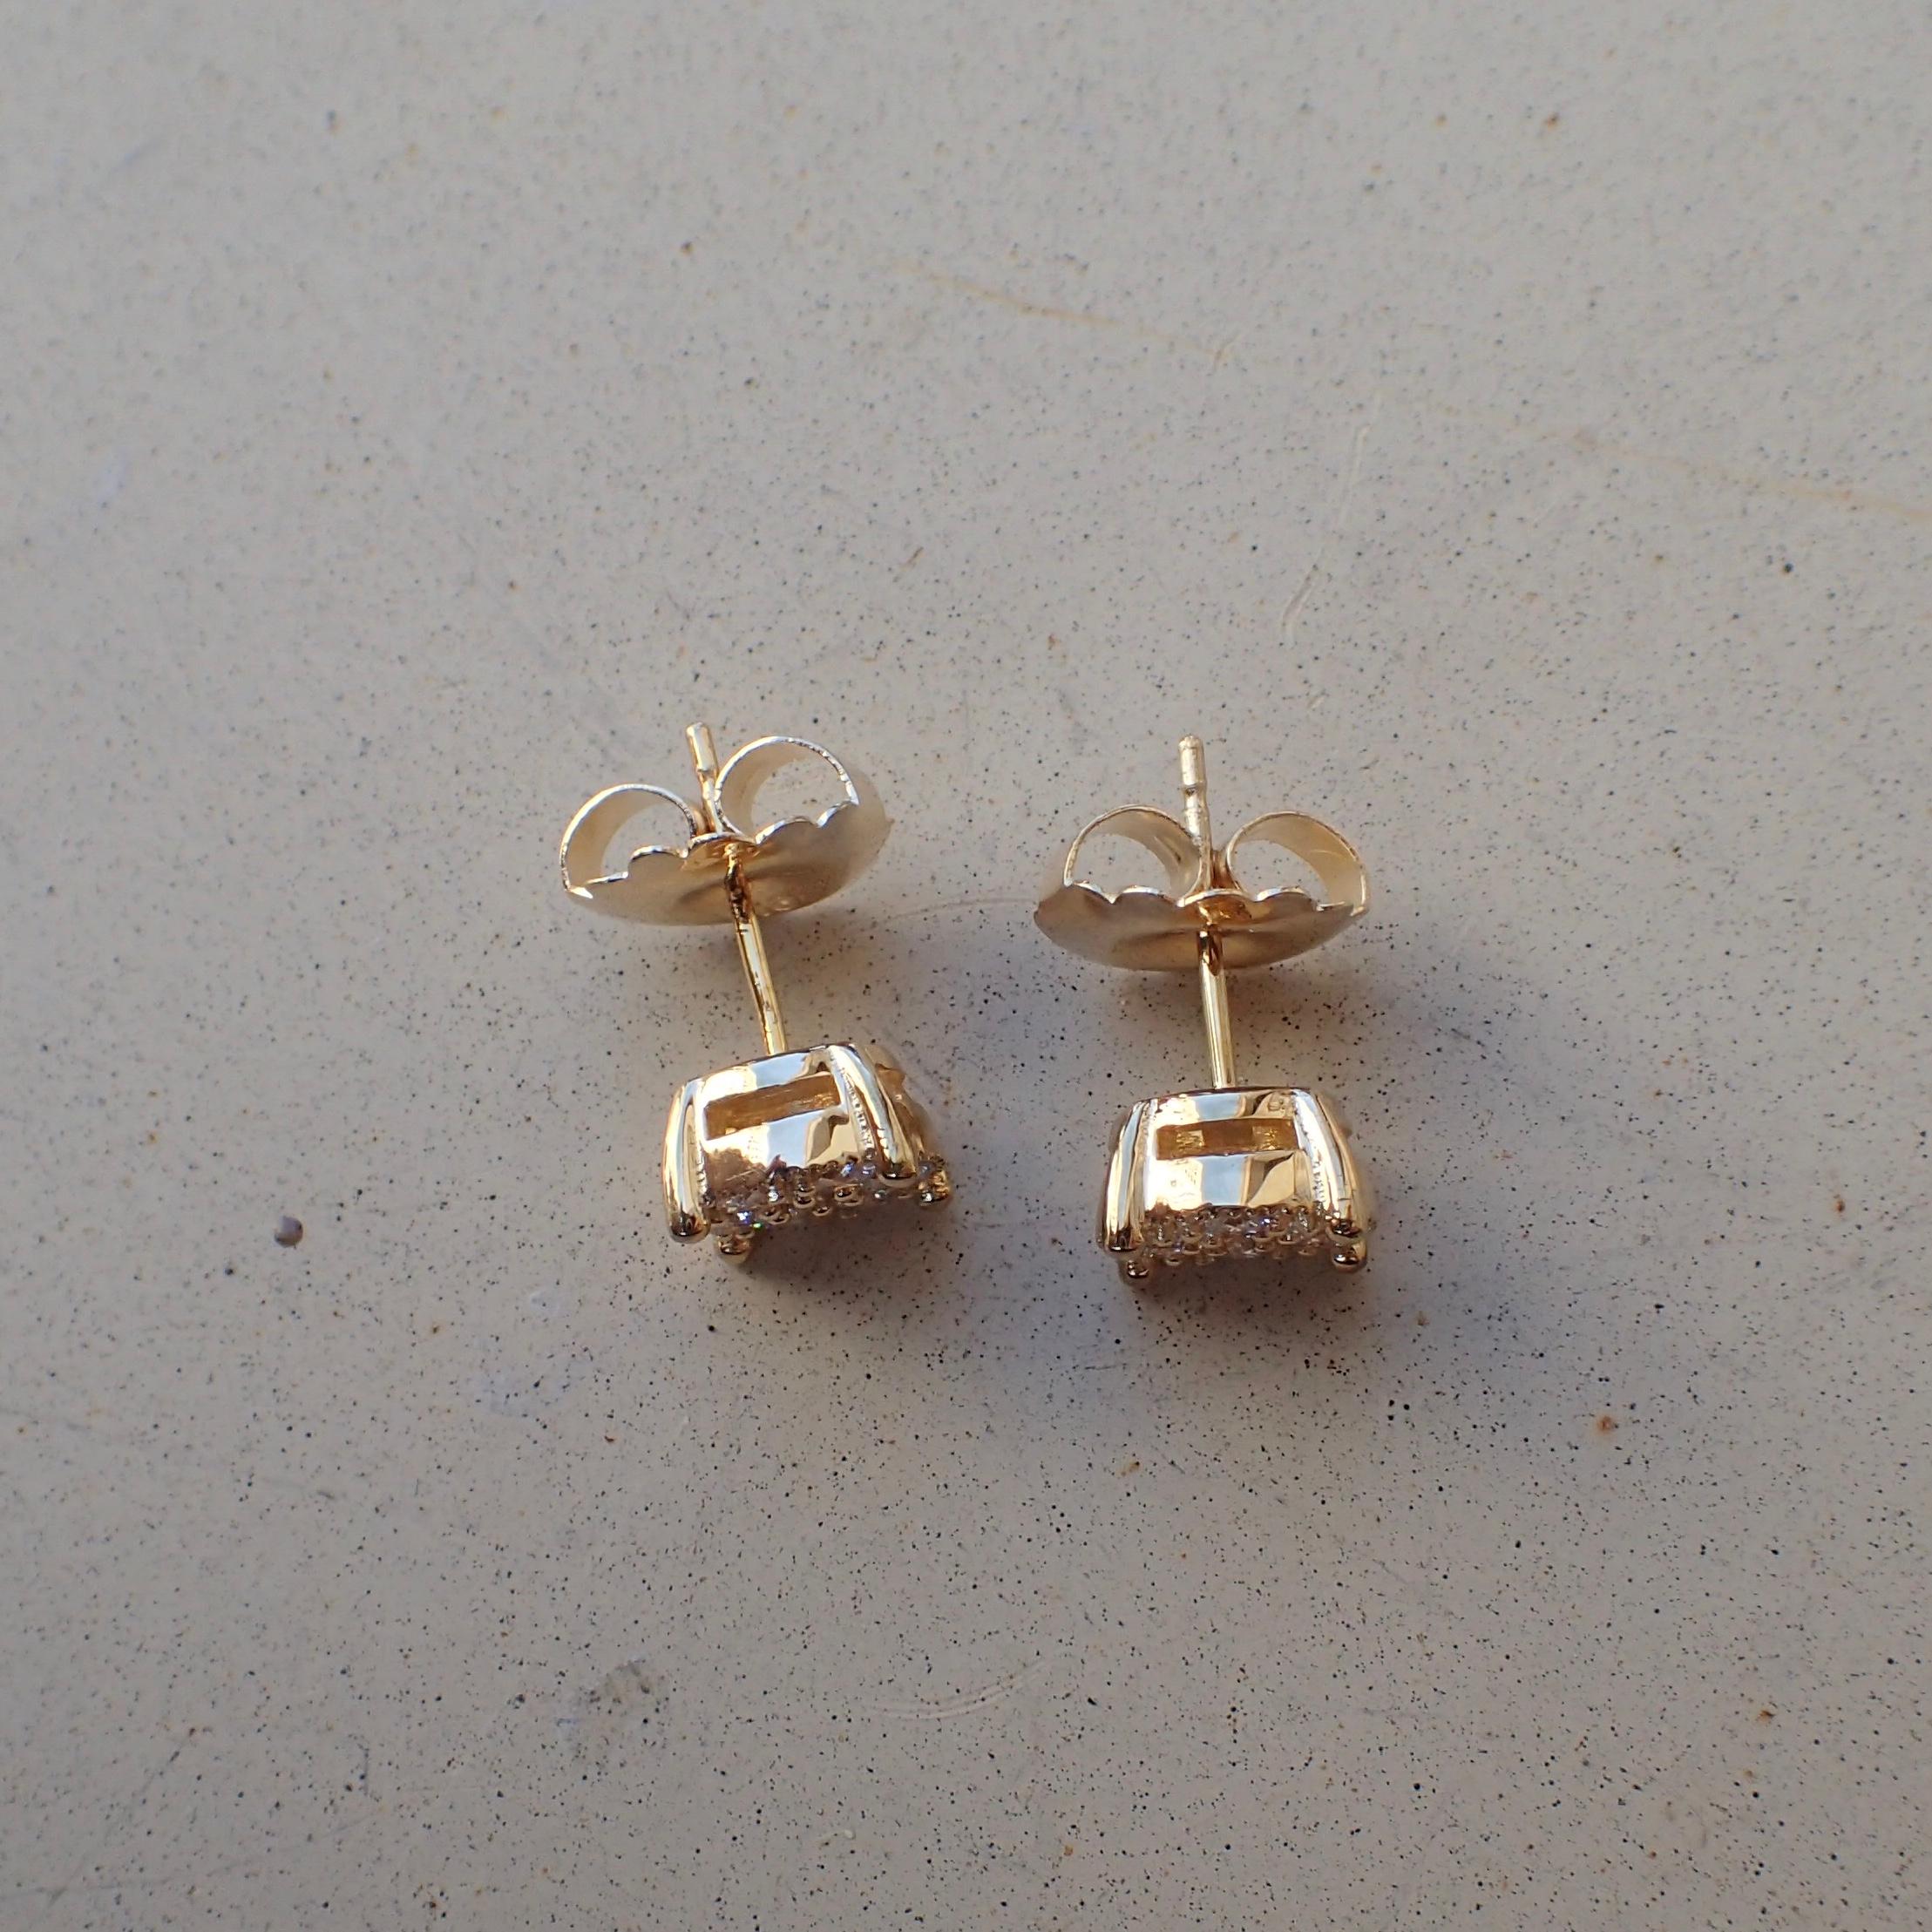 18 Karat Gold Stud Earrings are Set with 0.68 Carat of Diamond, Illusion Set 2